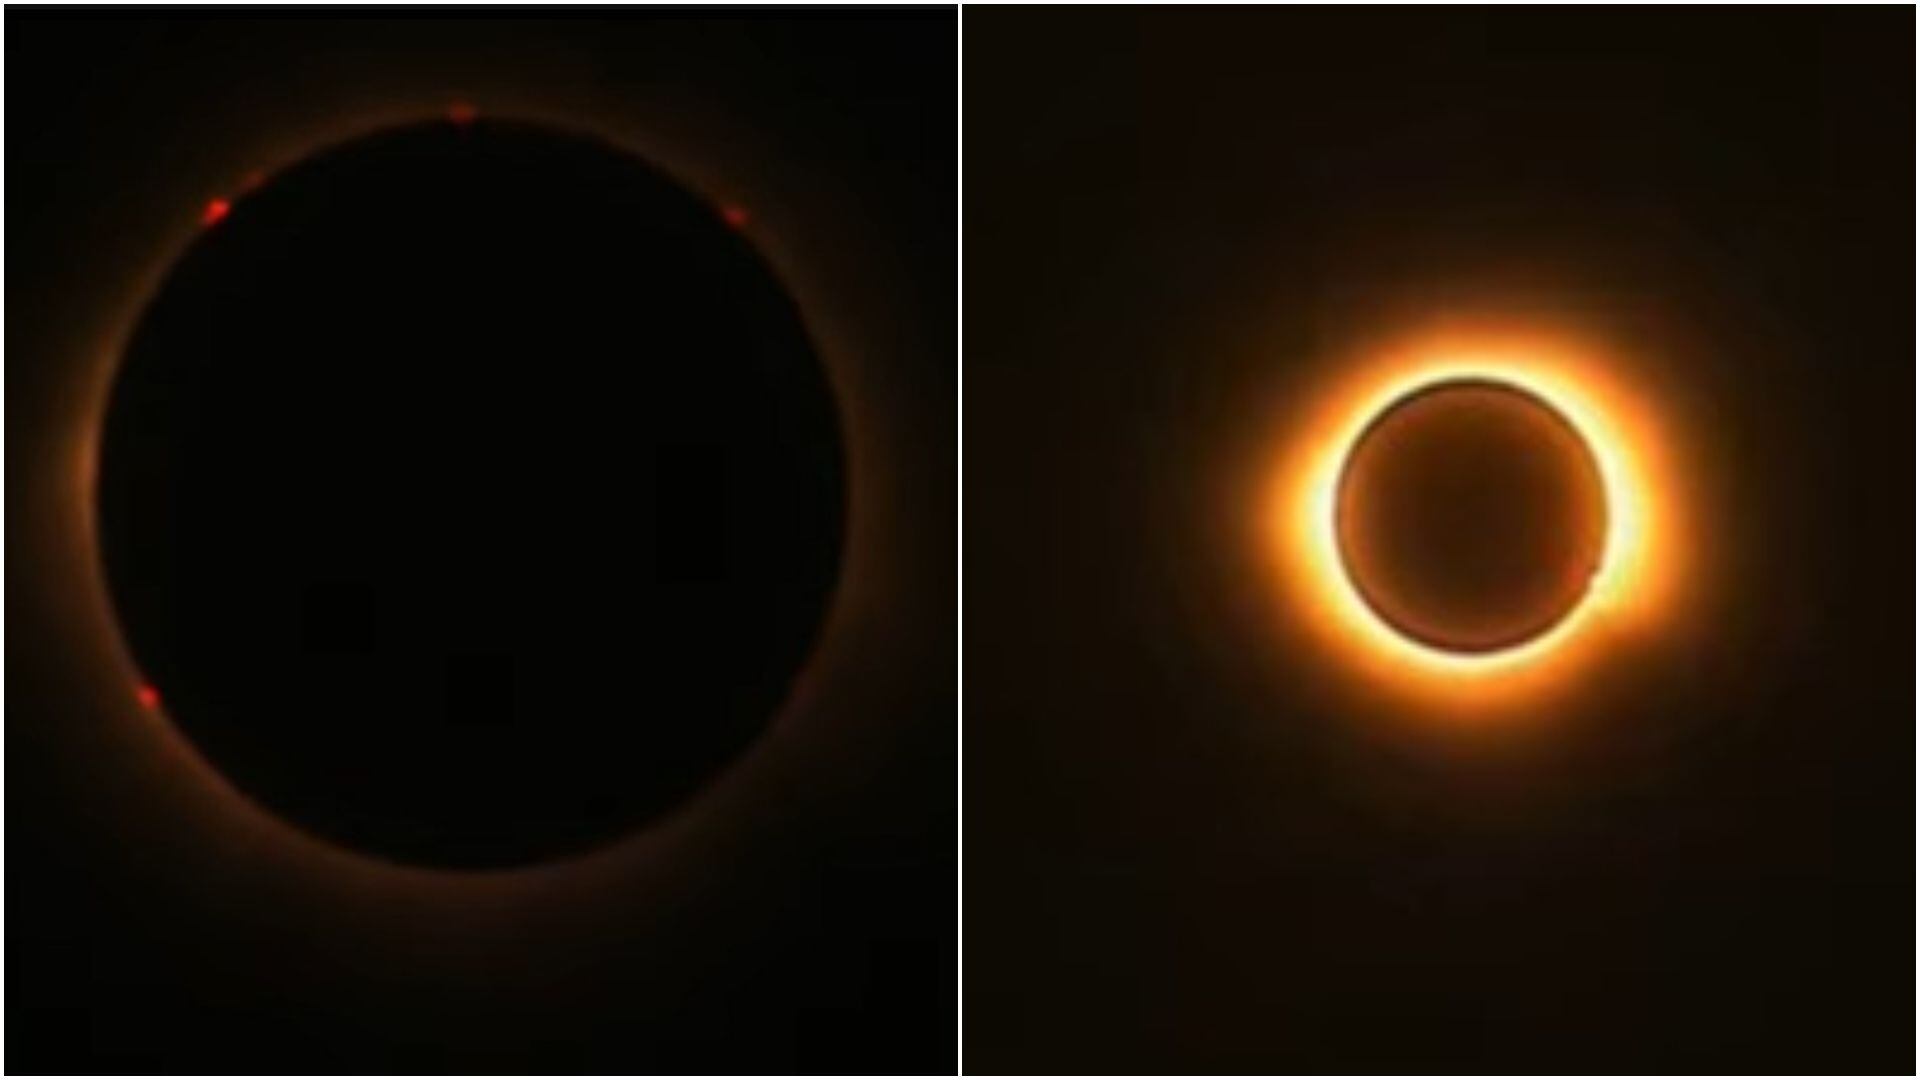 Eclipse solar total la NASA lanzó el primero de sus tres cohetes para